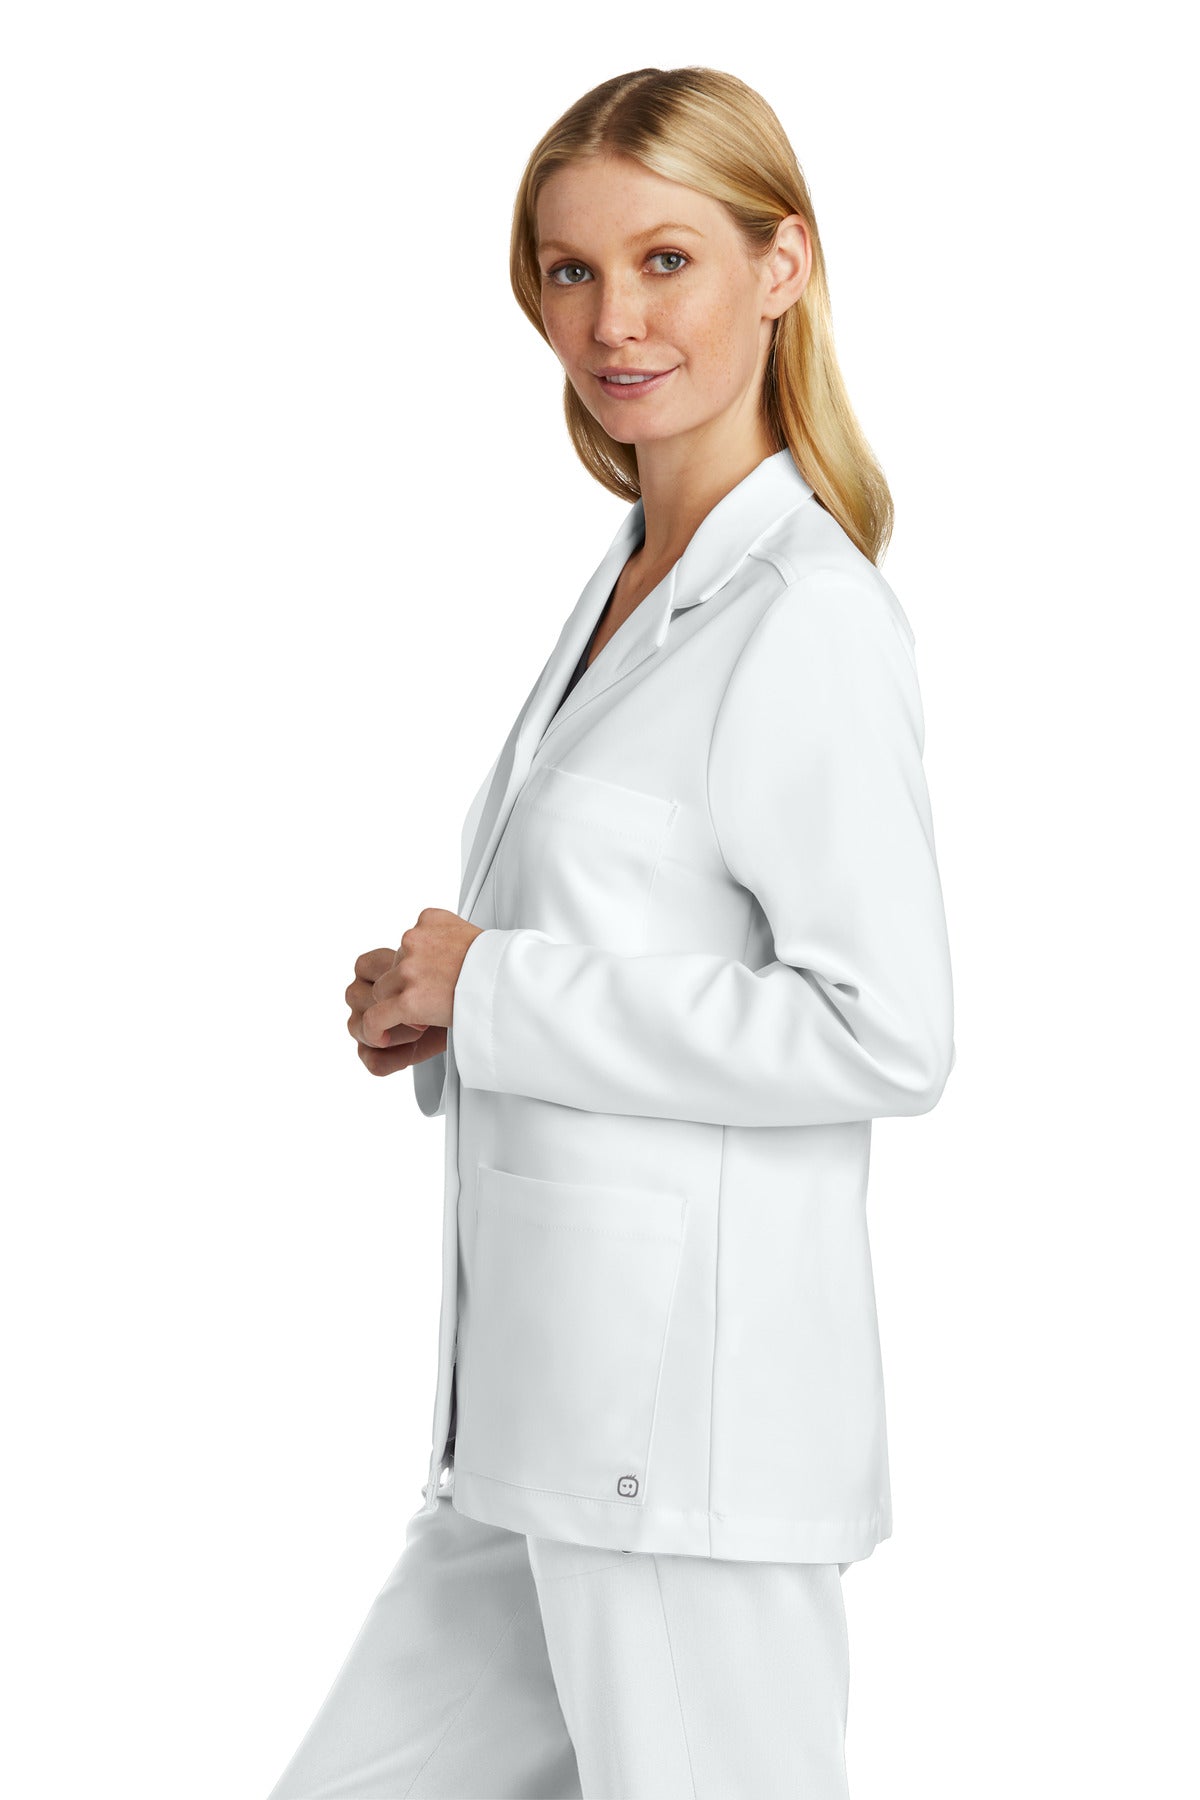 WonderWink® Women's Consultation Lab Coat WW4072 - DFW Impression